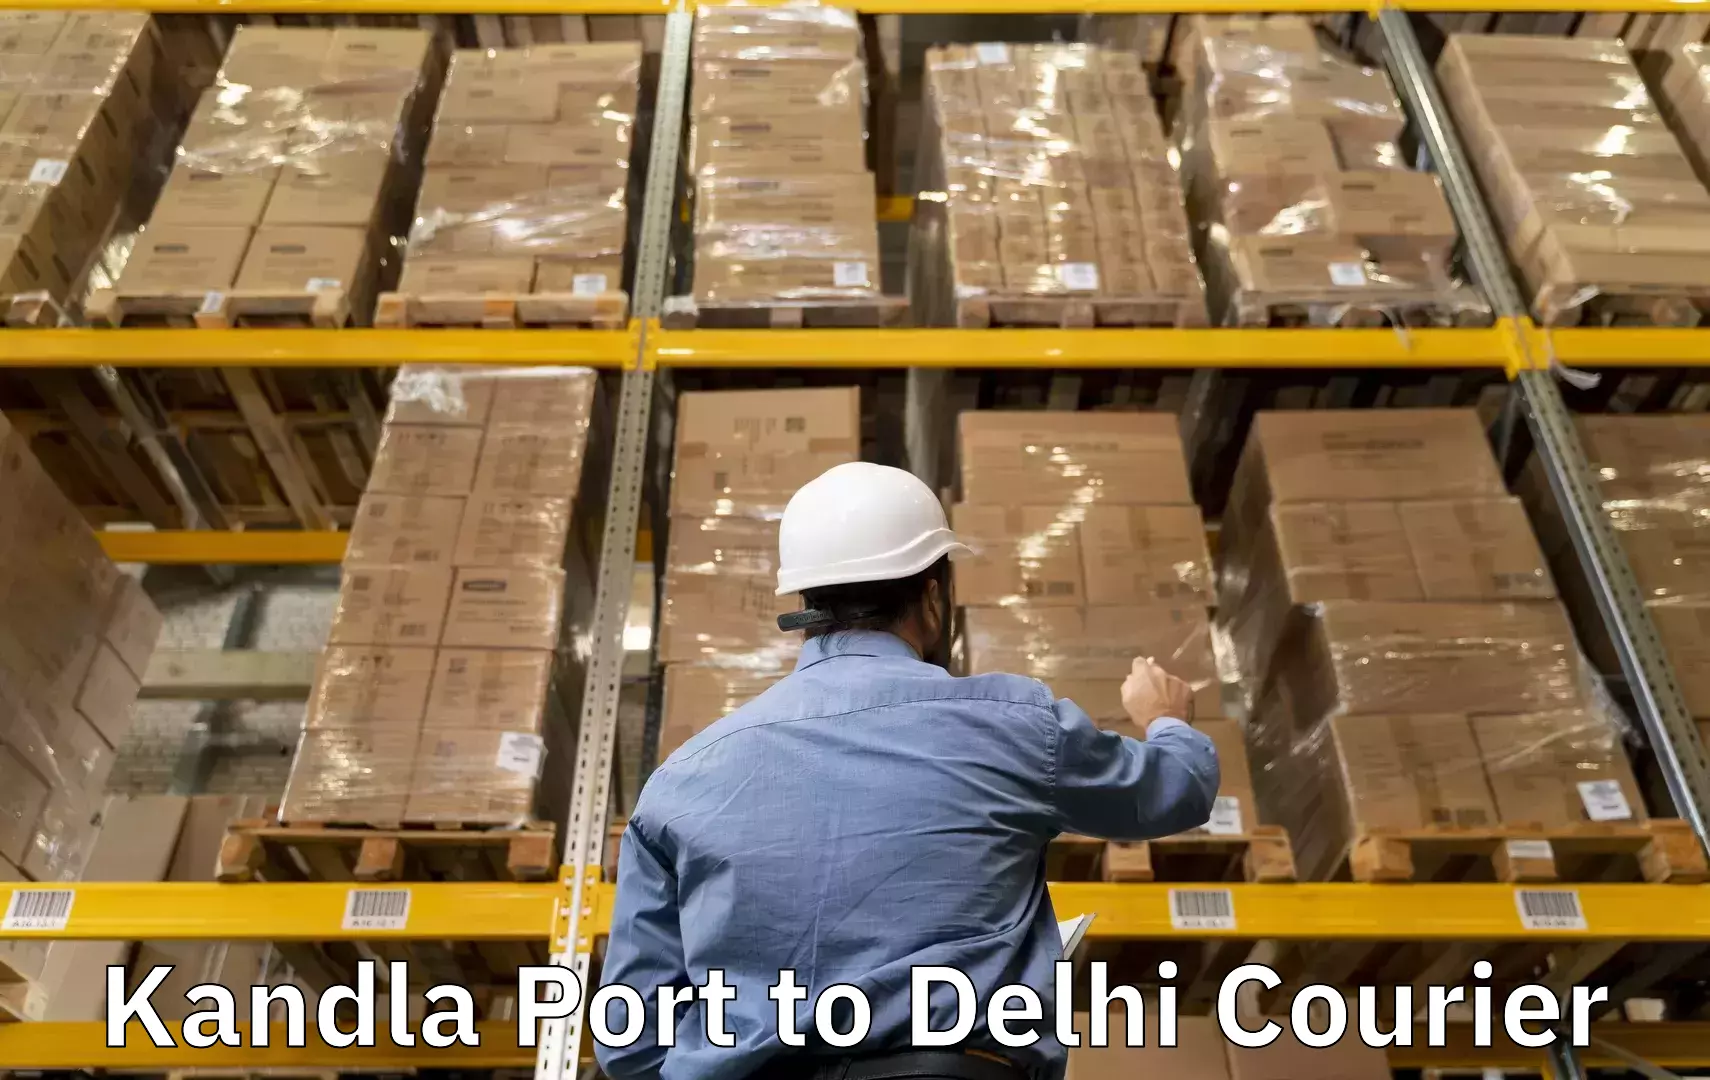 Baggage shipping service Kandla Port to Delhi